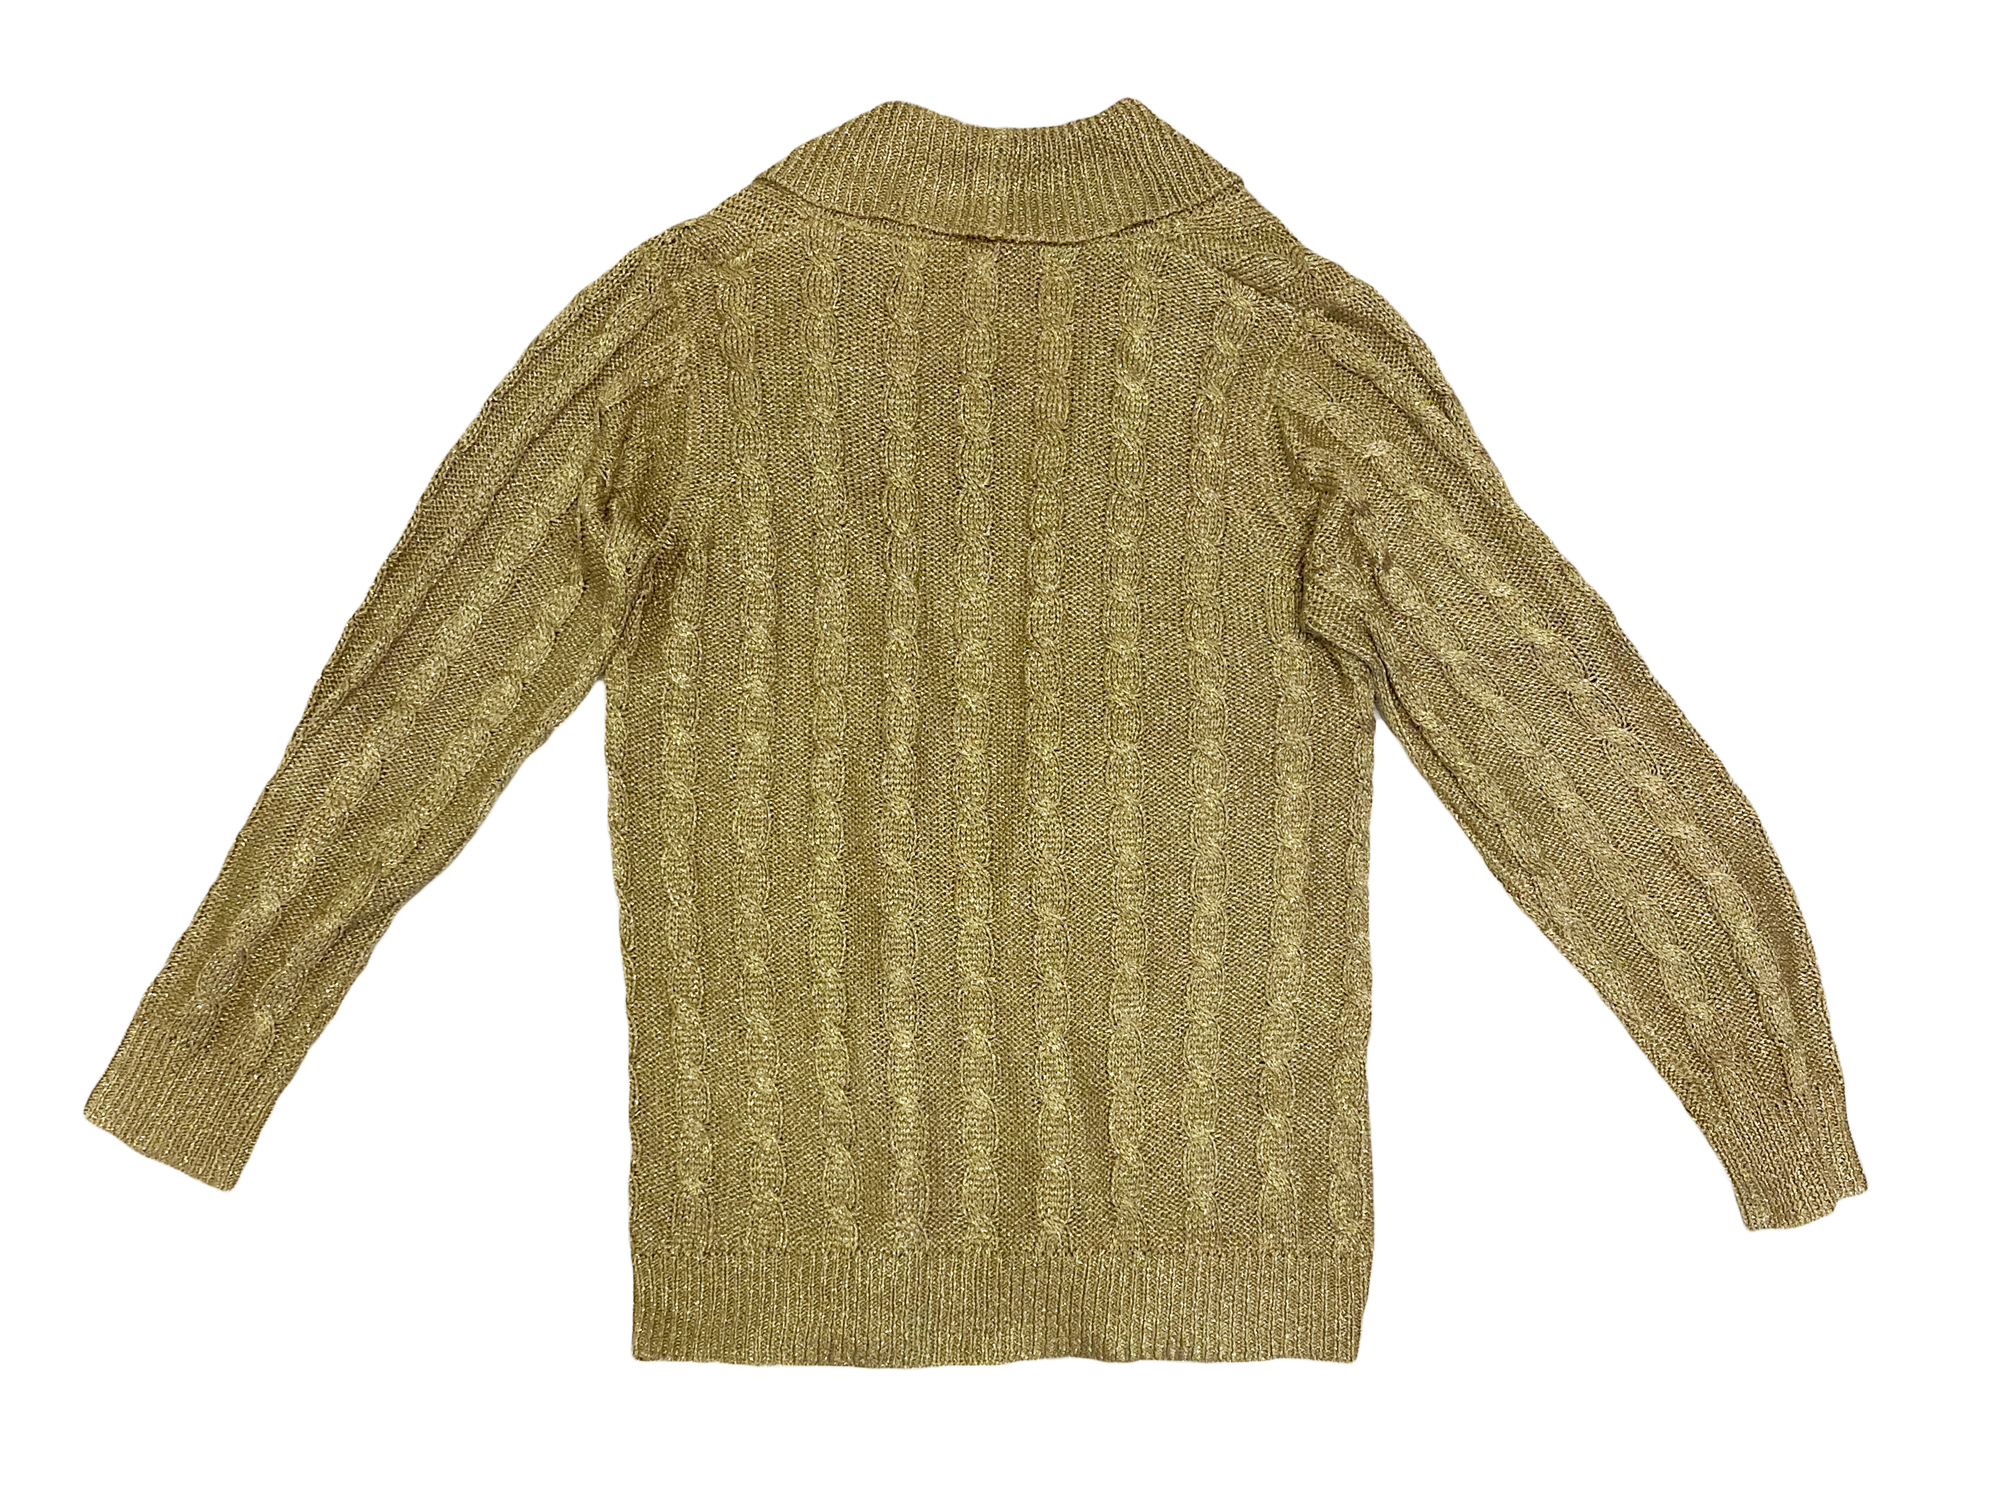 Hanley Mellon Women's Shimmer Knit Cardigan | eBay